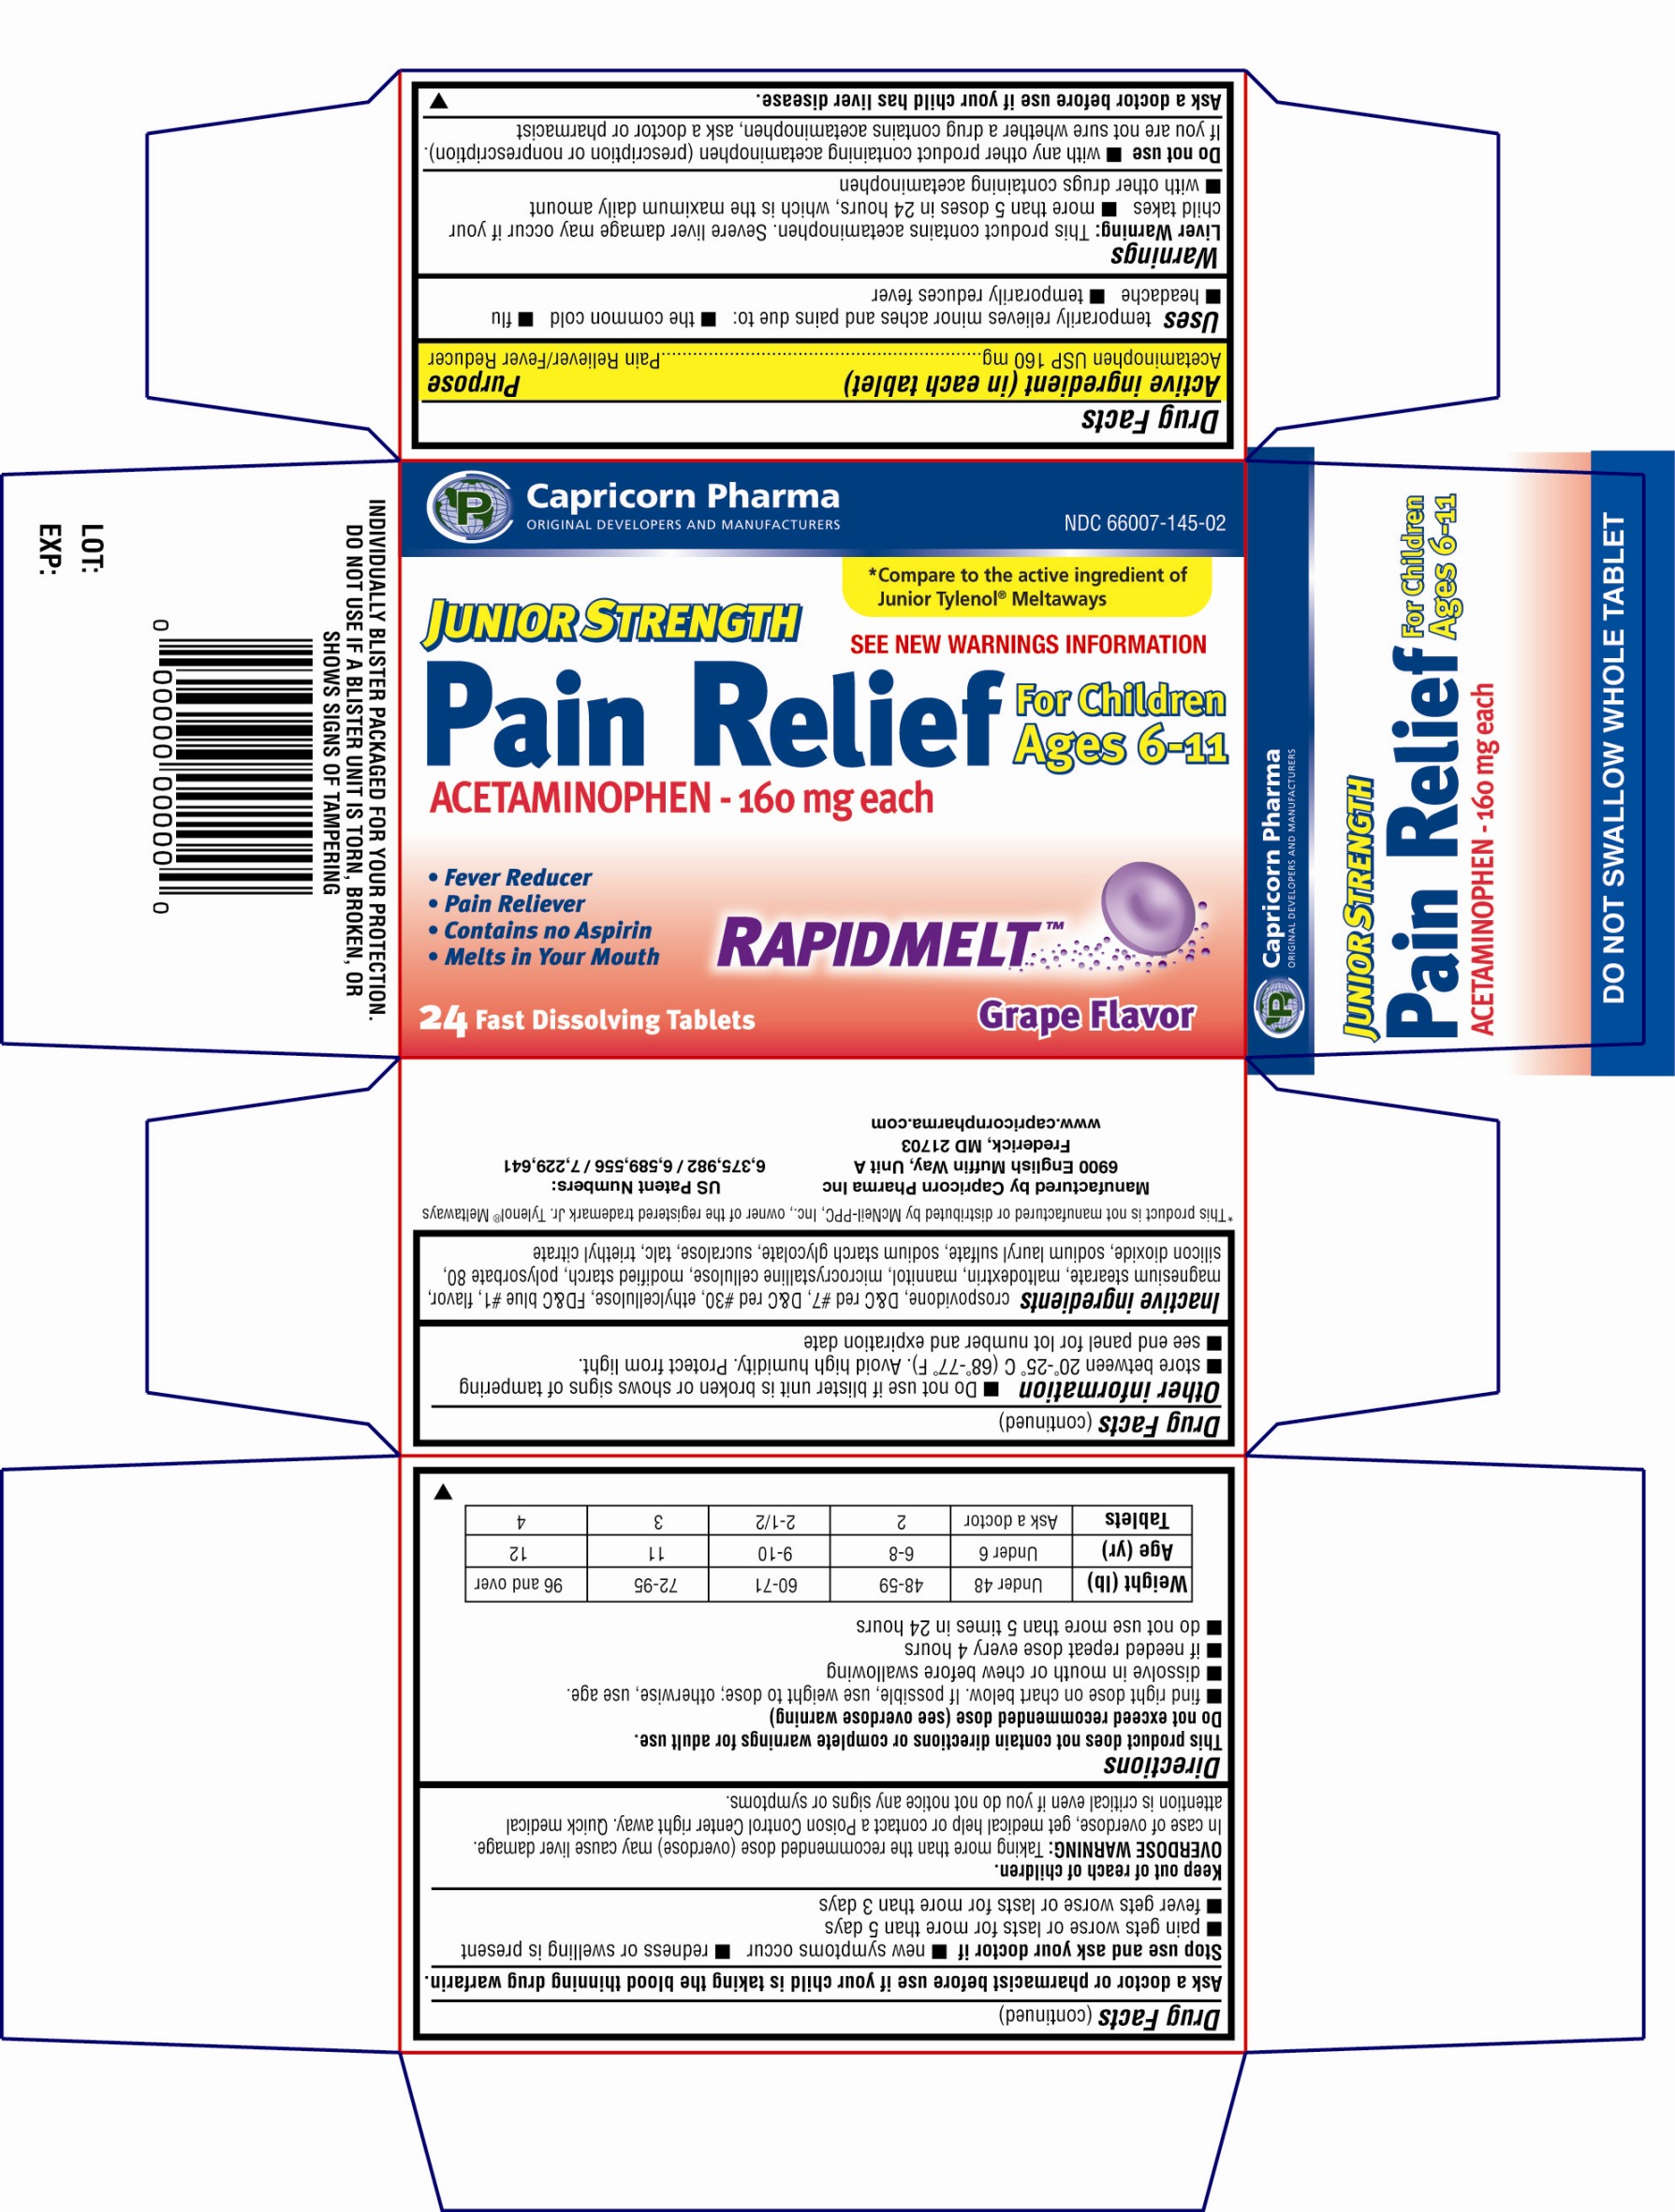 Junior strength Pain Relief Acetaminophen 160mg